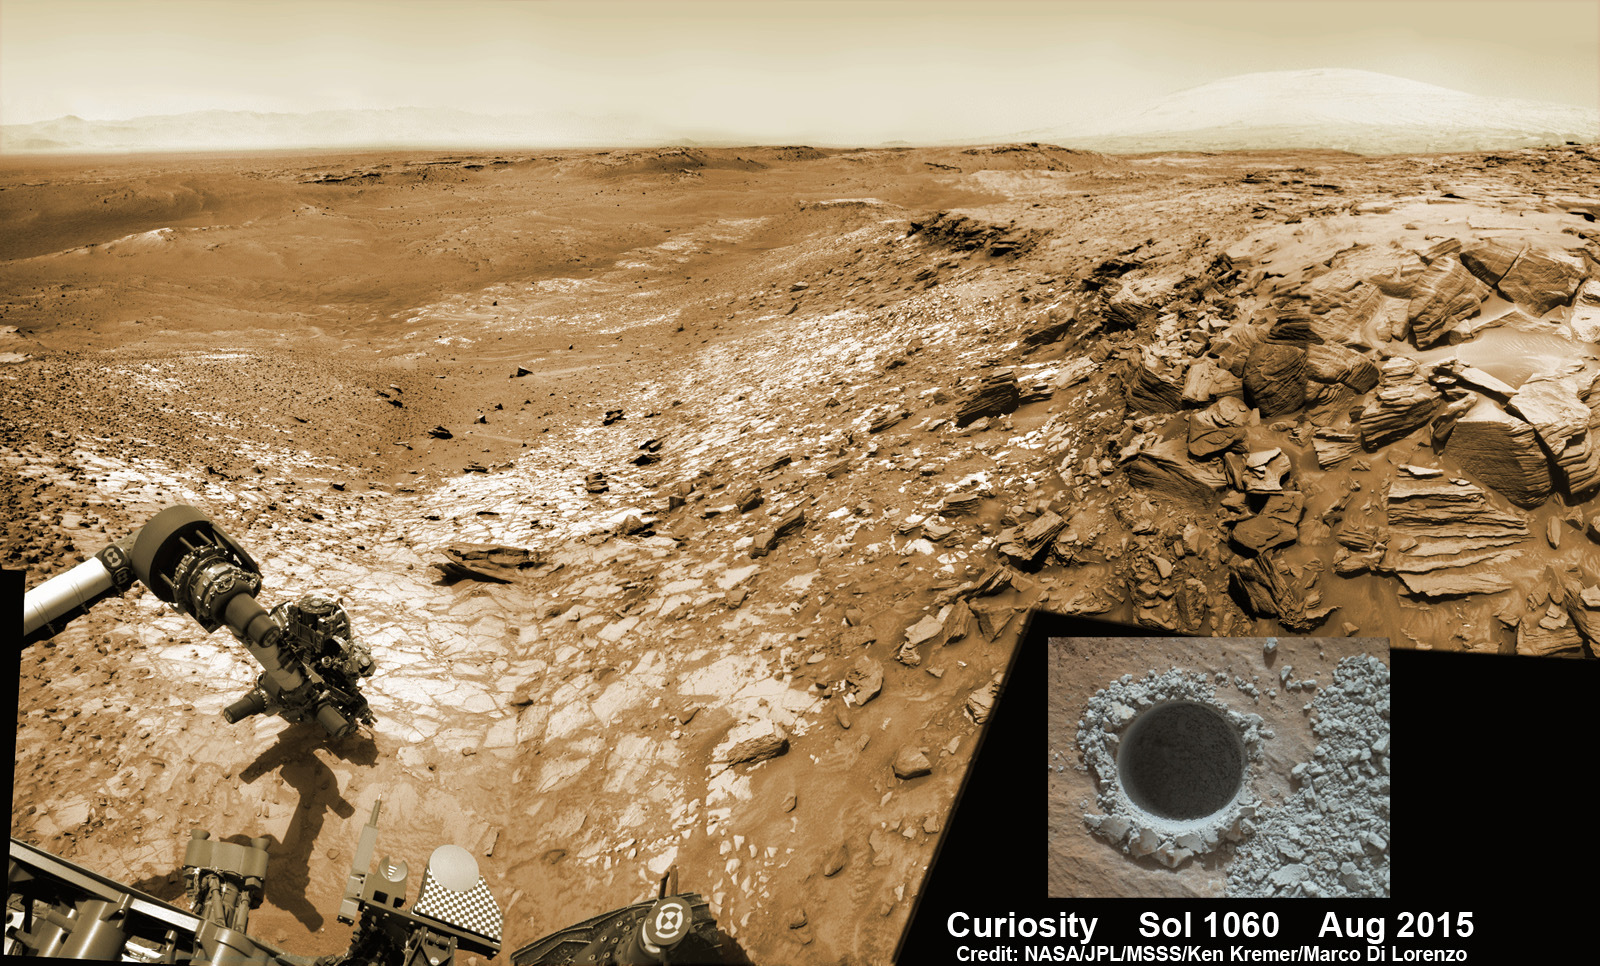 Mars Curiosity Rover testing soil